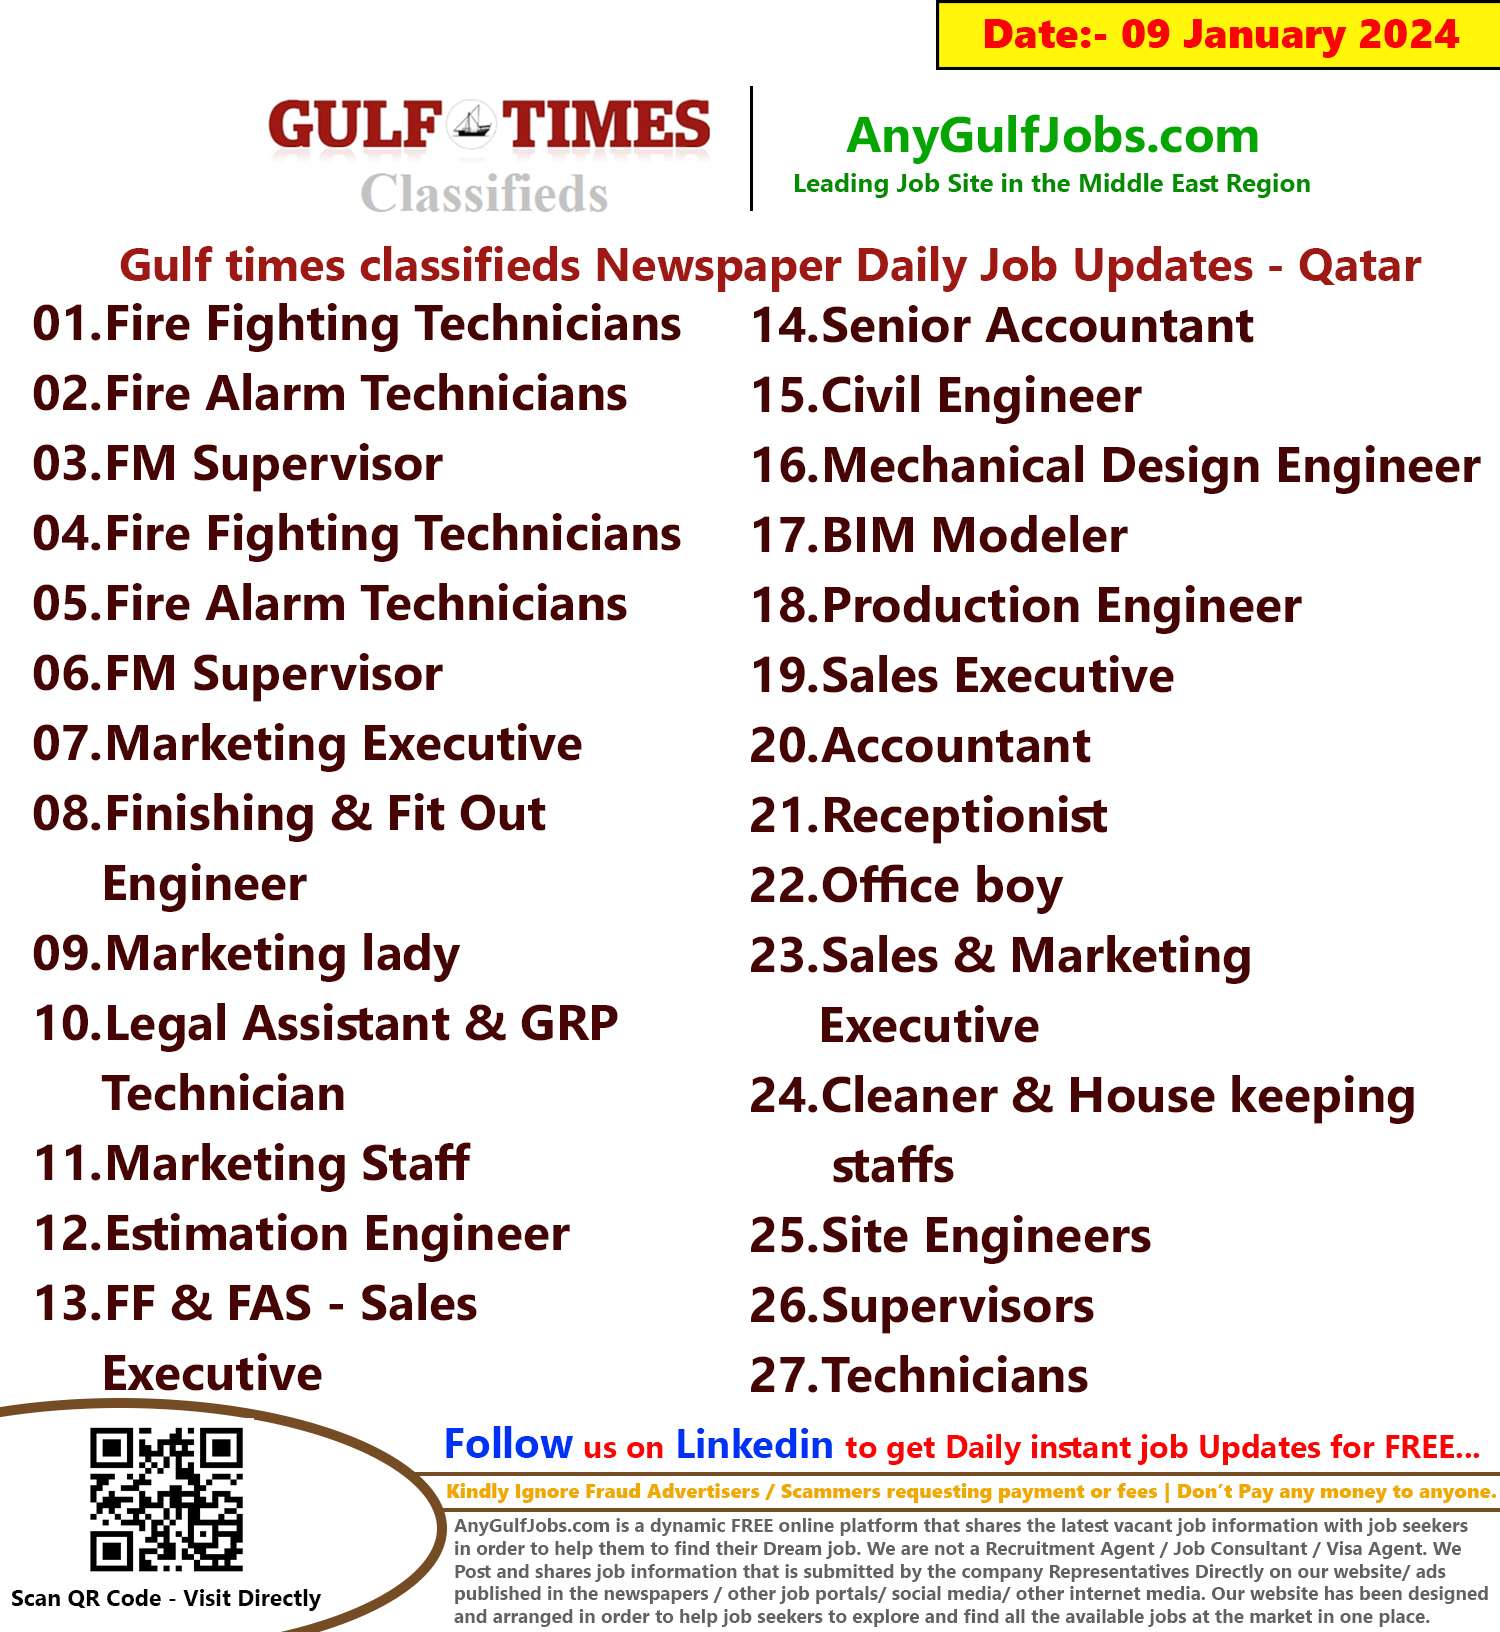 Gulf Times Classifieds Job Vacancies Qatar - 09 January 2024